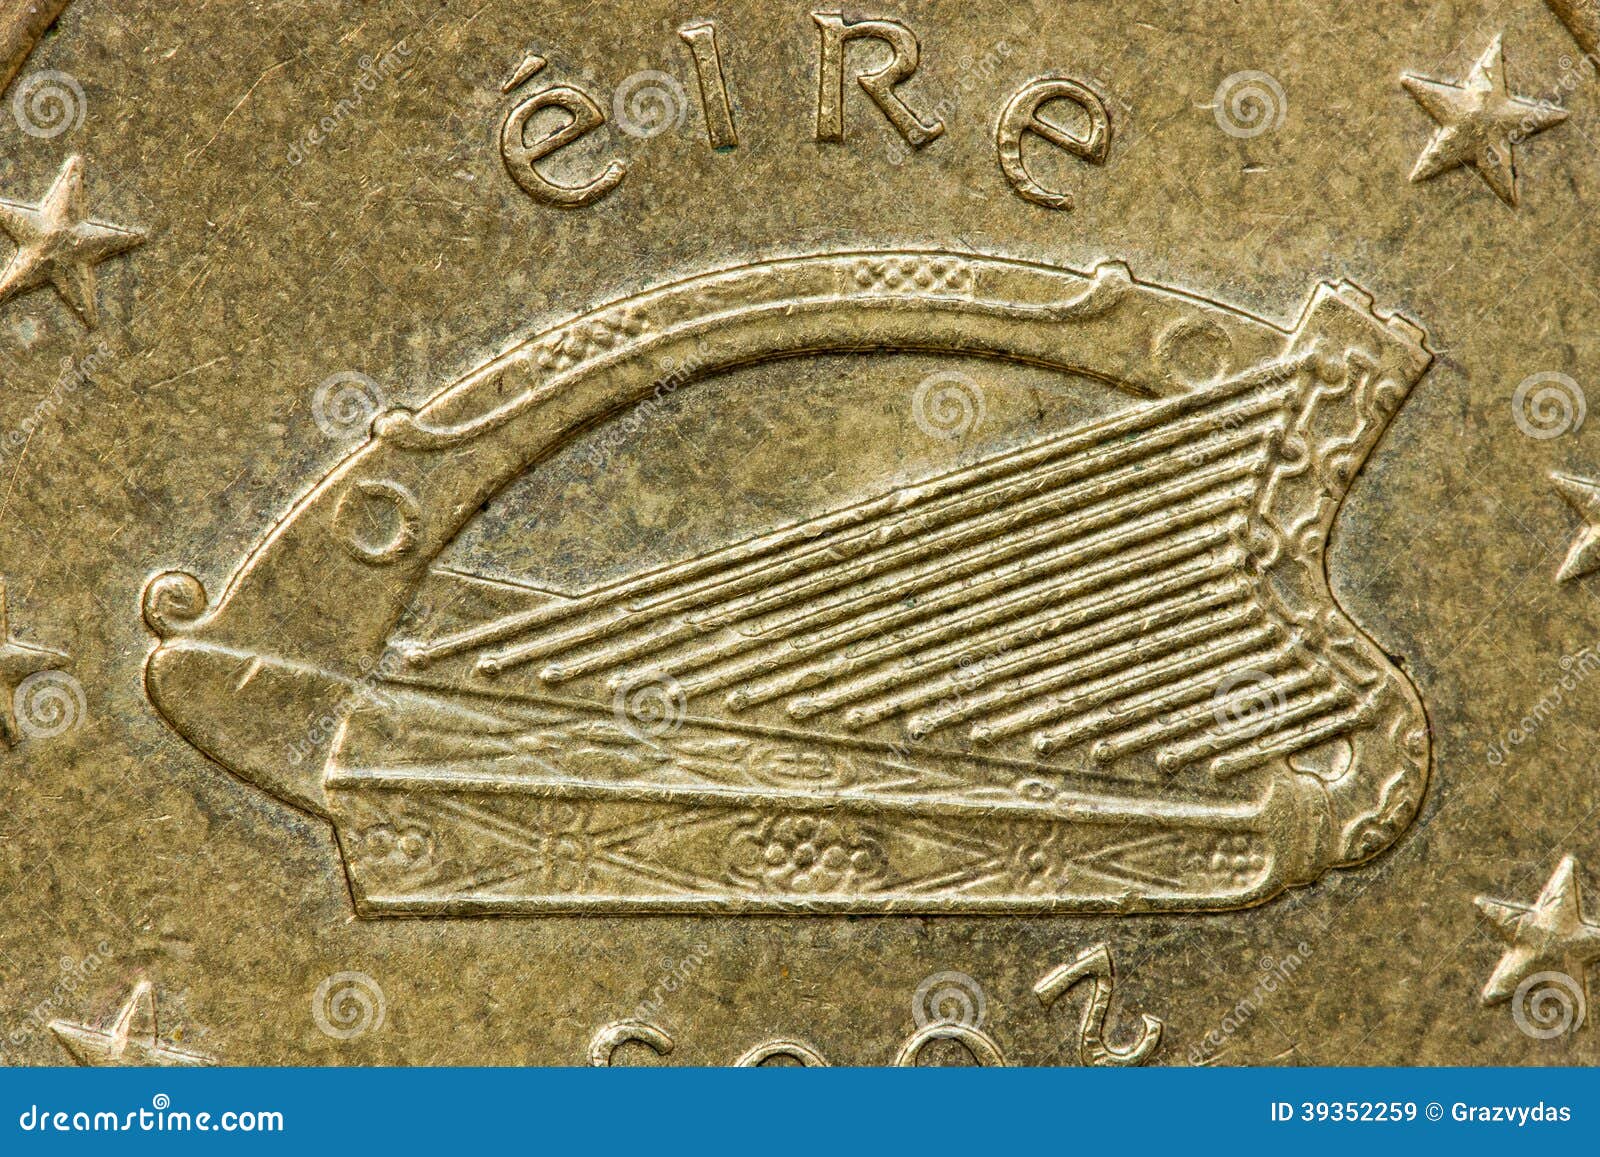 Harpe Celtique De L'Irlande Photo stock - Image: 39352259